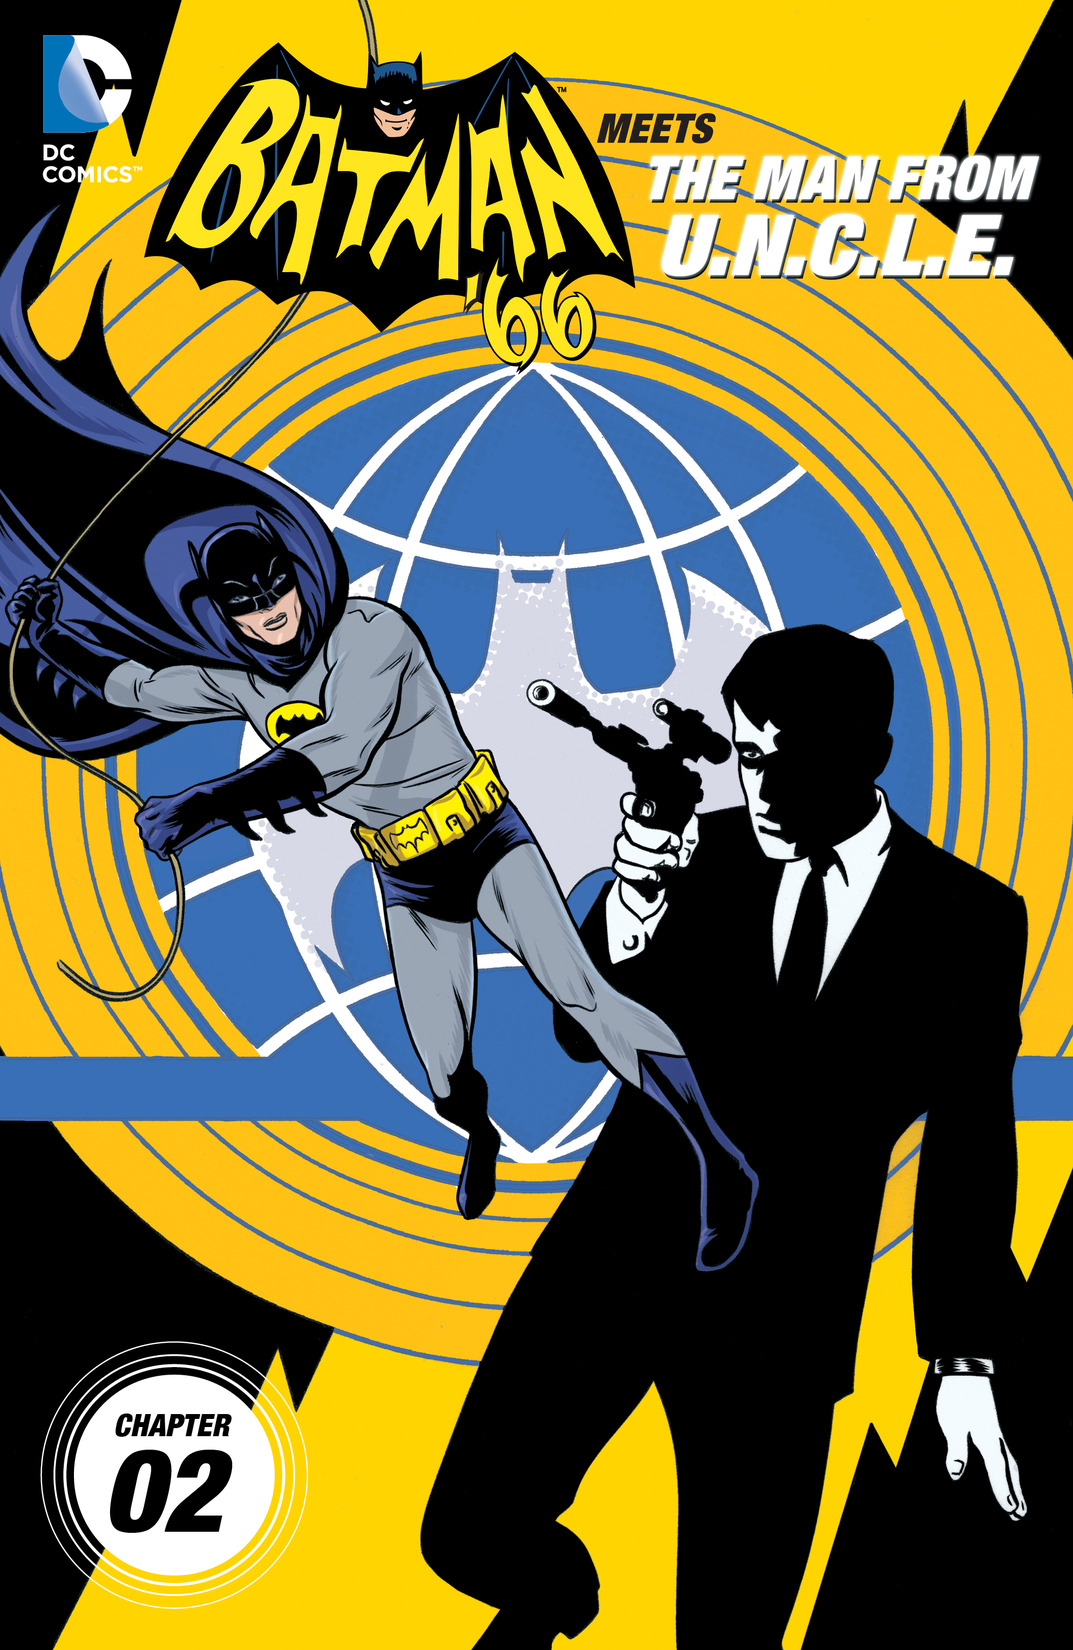 Batman '66 Meets The Man From U.N.C.L.E. #2 preview images